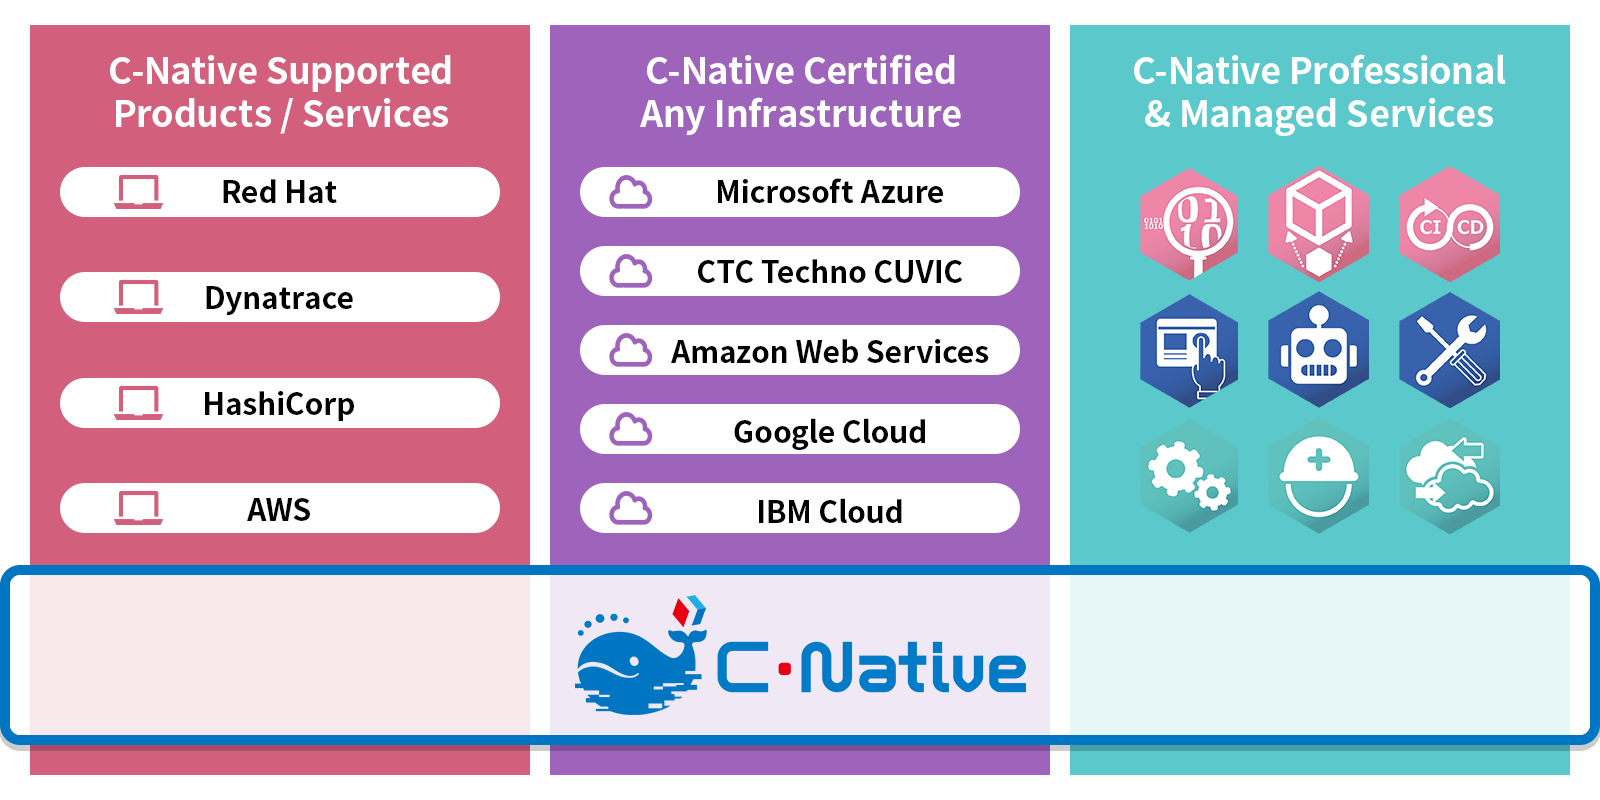 C-Nativeサービス